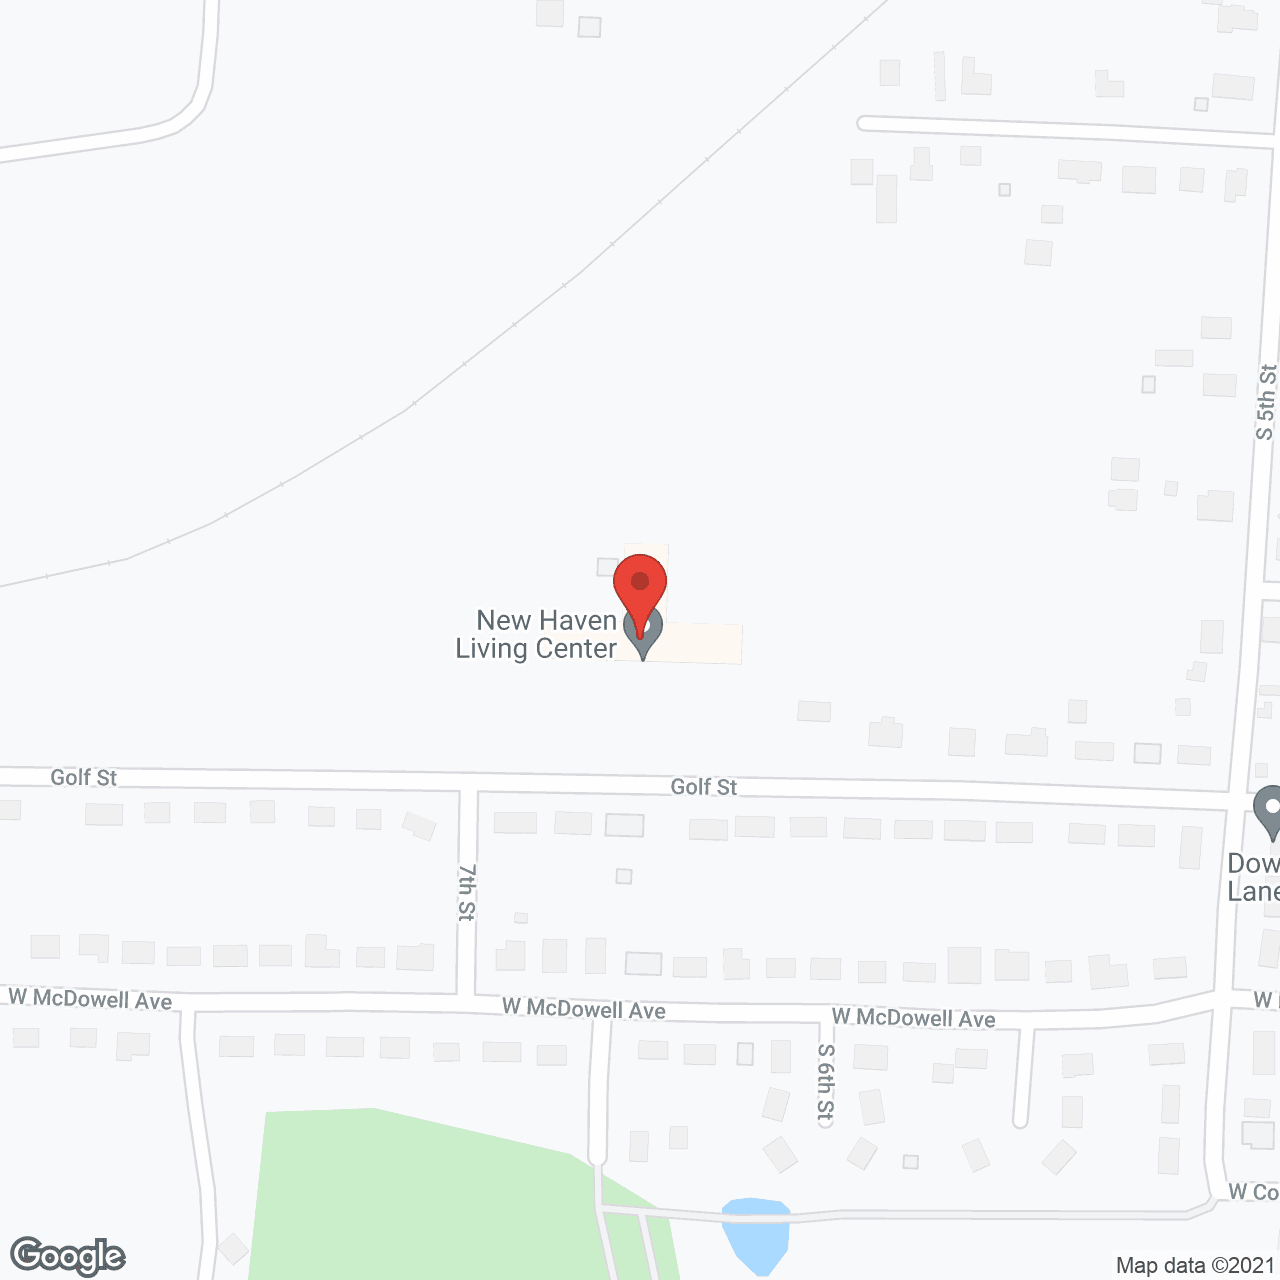 Golden Living Center - New Haven in google map